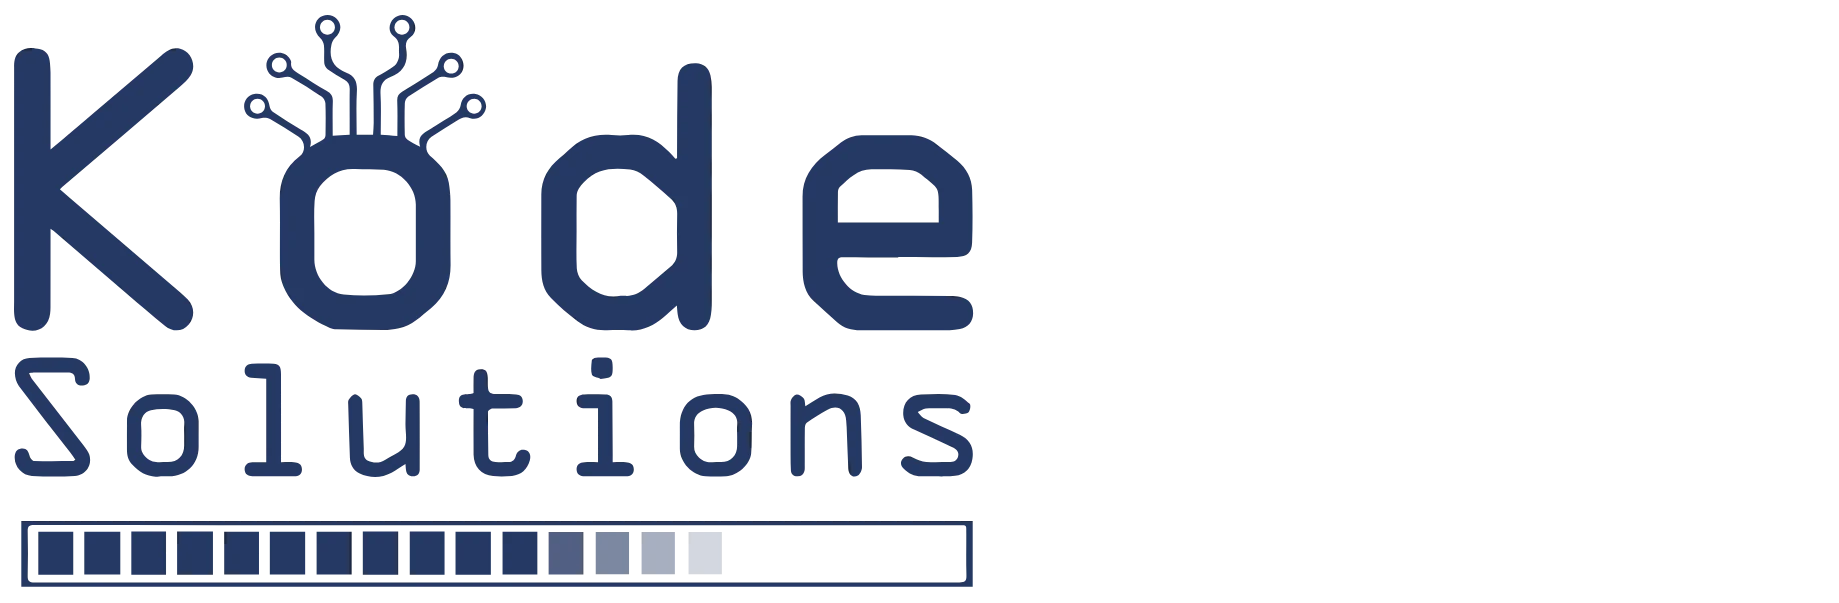 kode-solutions-logo